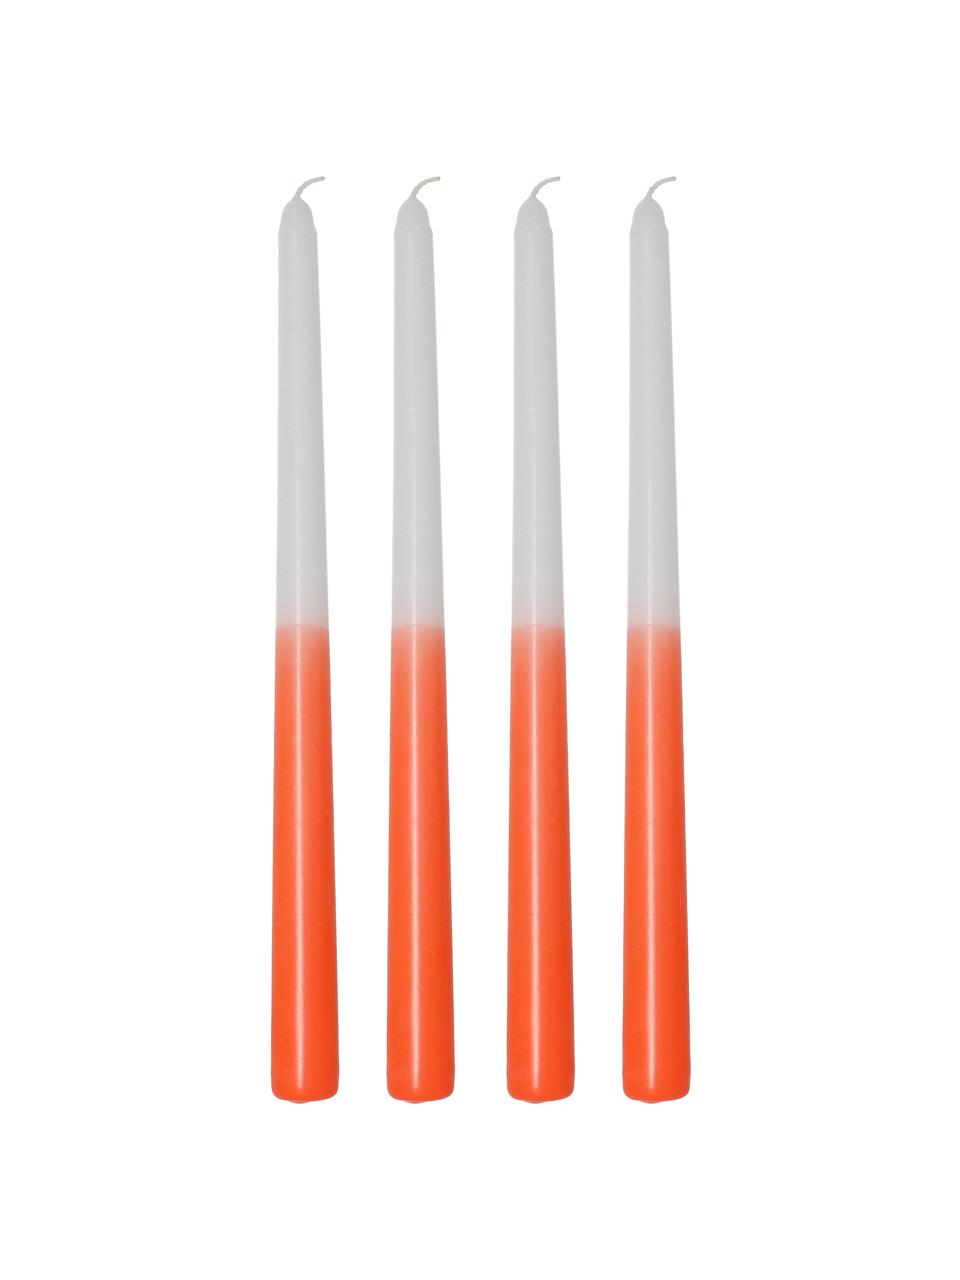 Candela bastone color arancione/bianco Dubli 4 pz, Cera, Arancione, bianco, Ø 2 x Alt. 31 cm